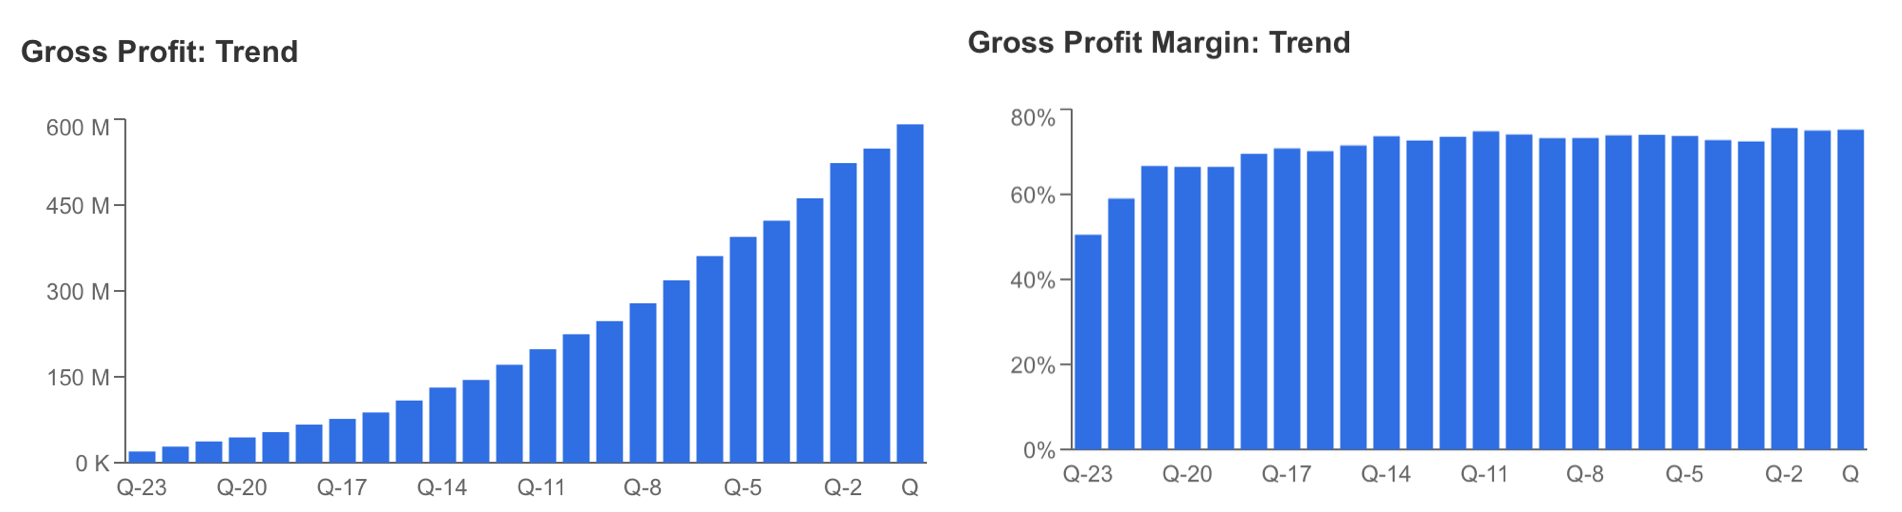 Gross Profit Trend